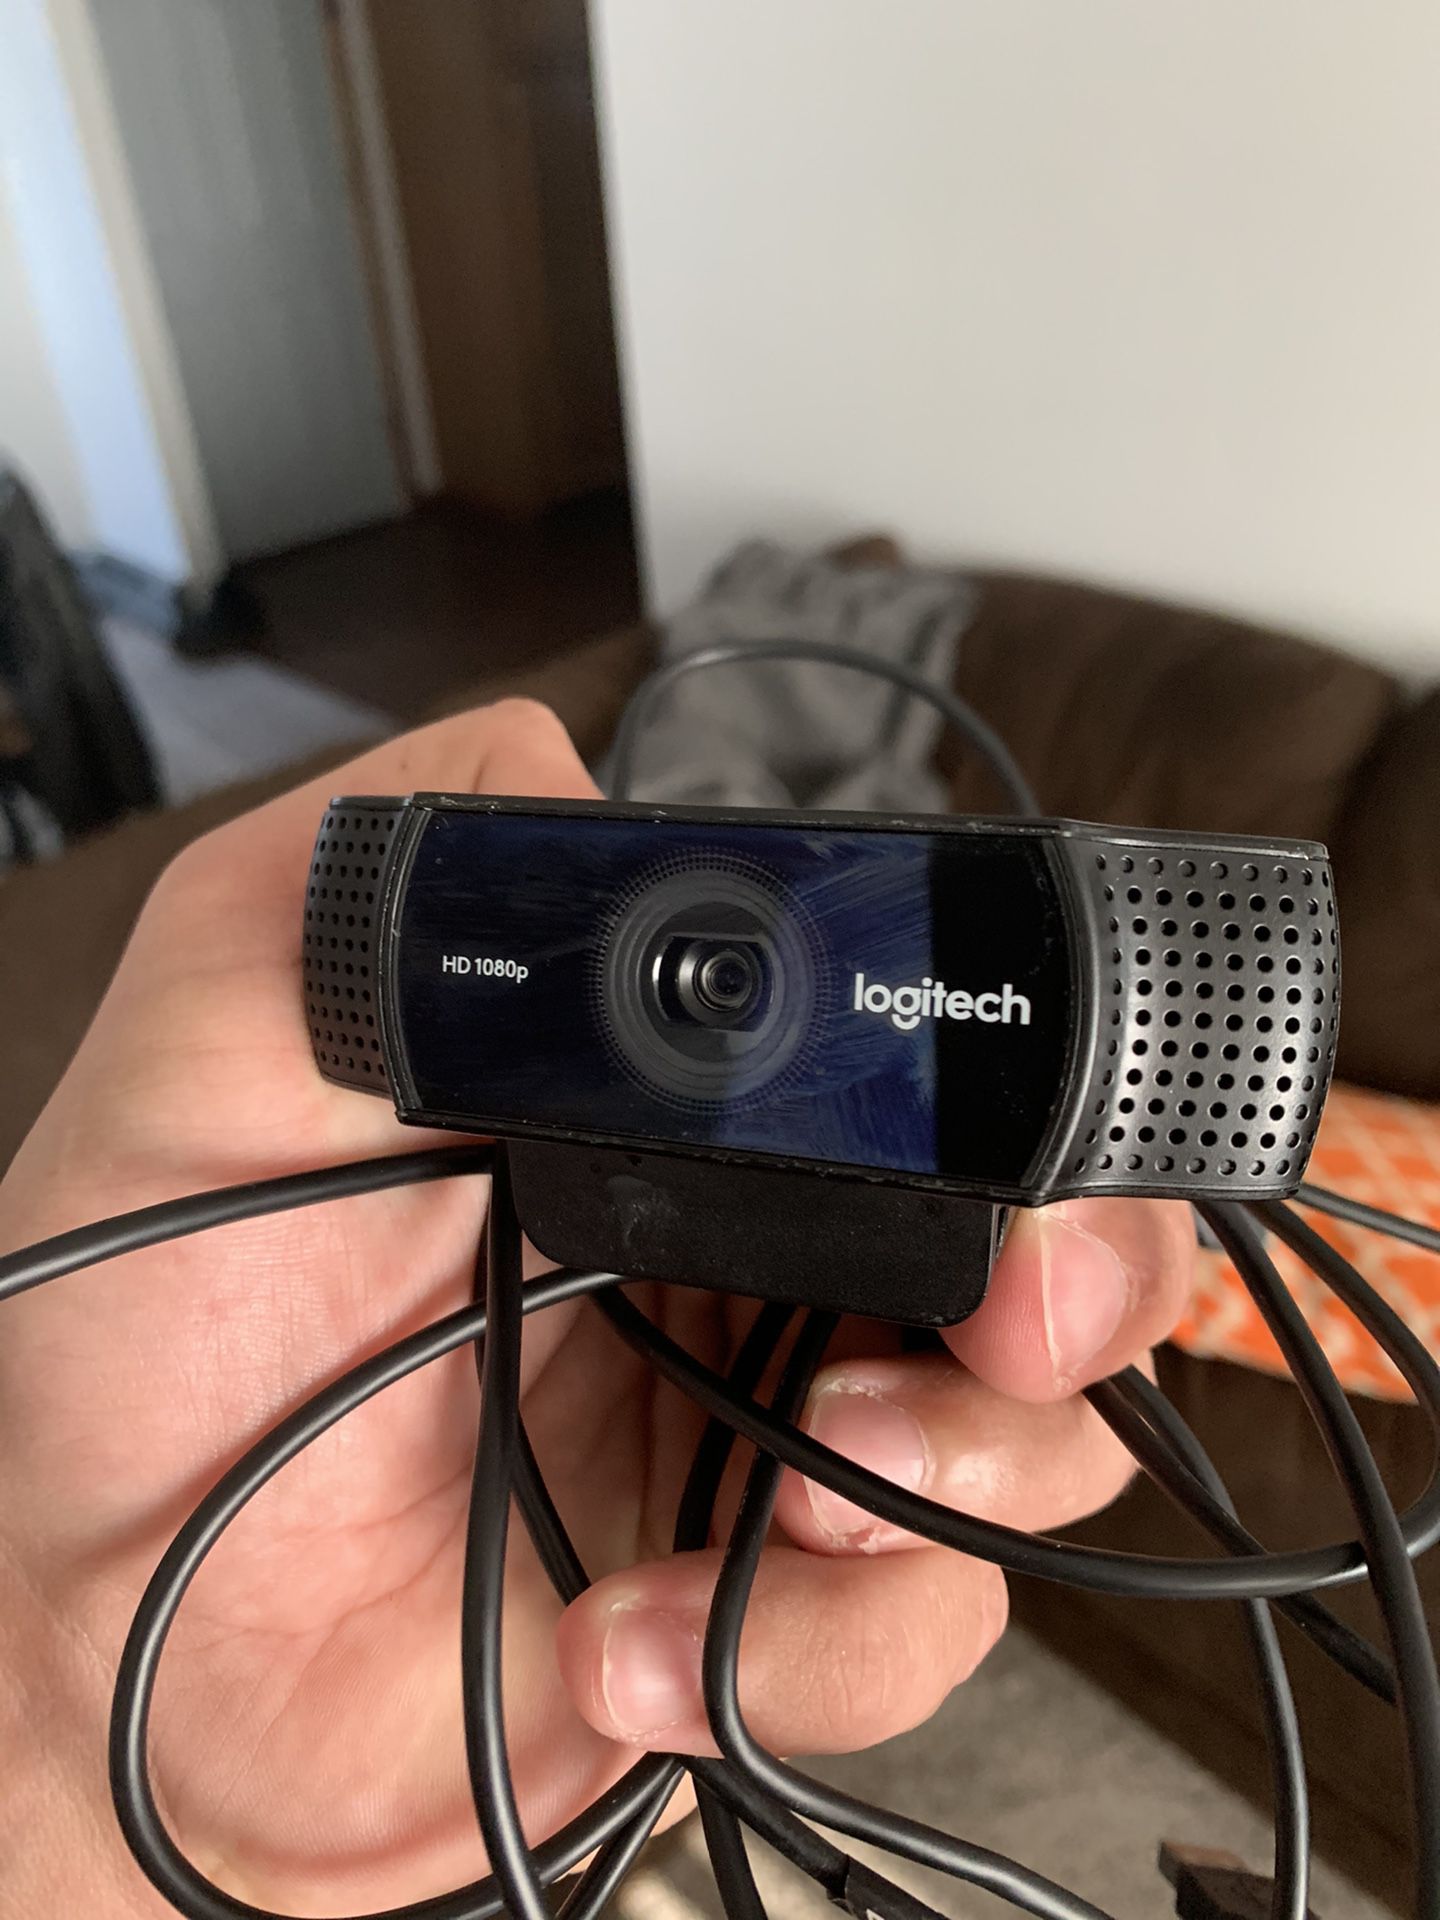 Logetic c920 hd webcam